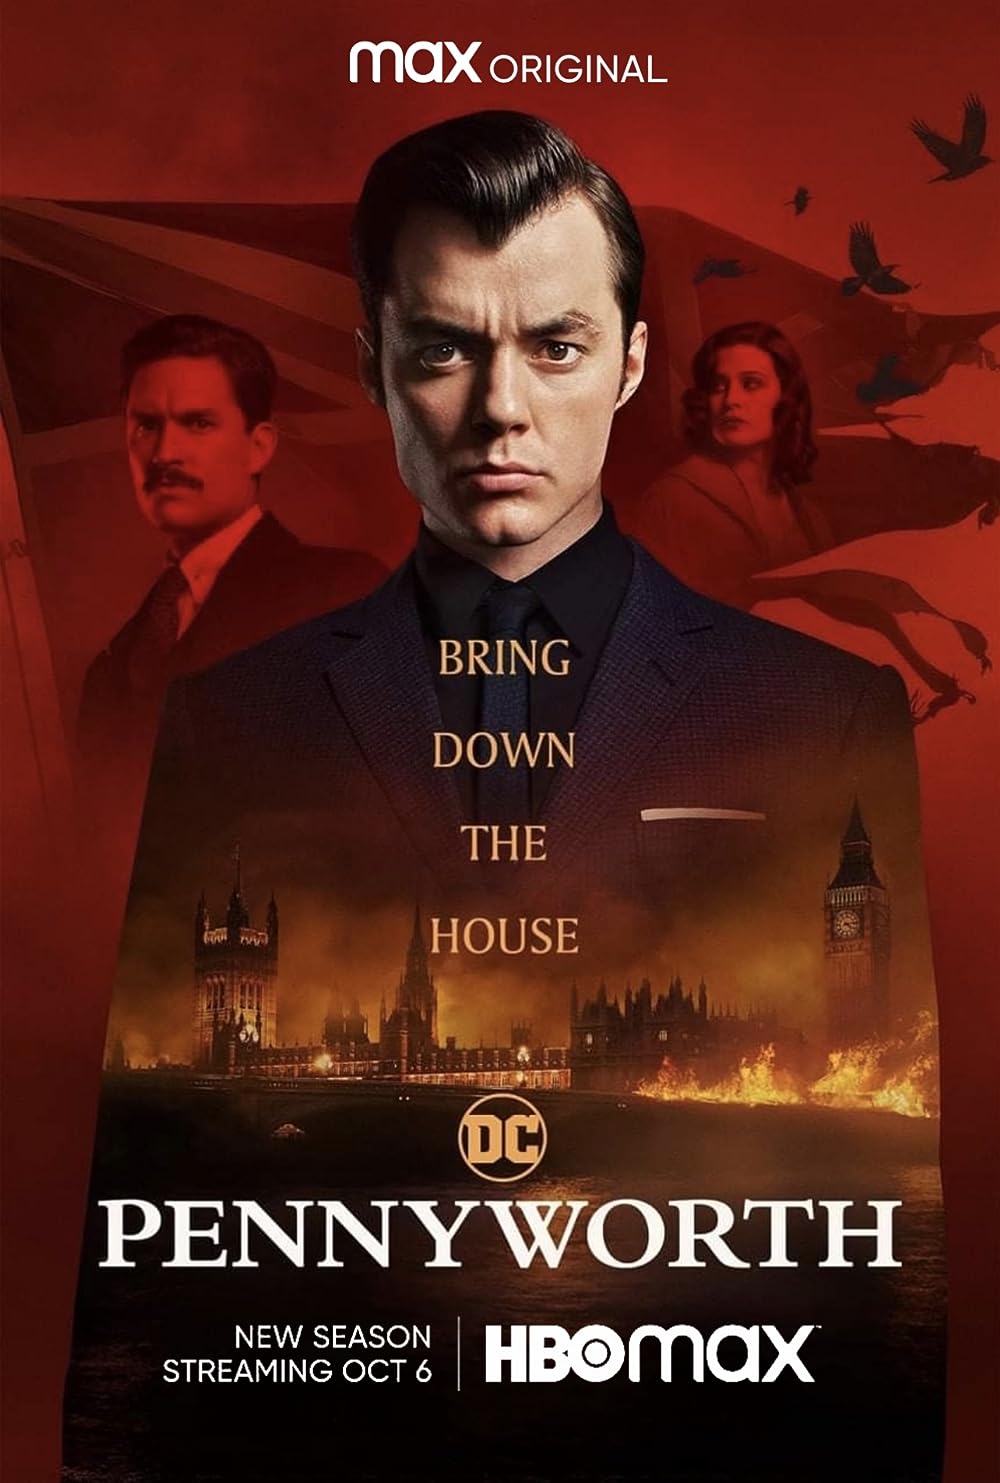 Pennyworth poster